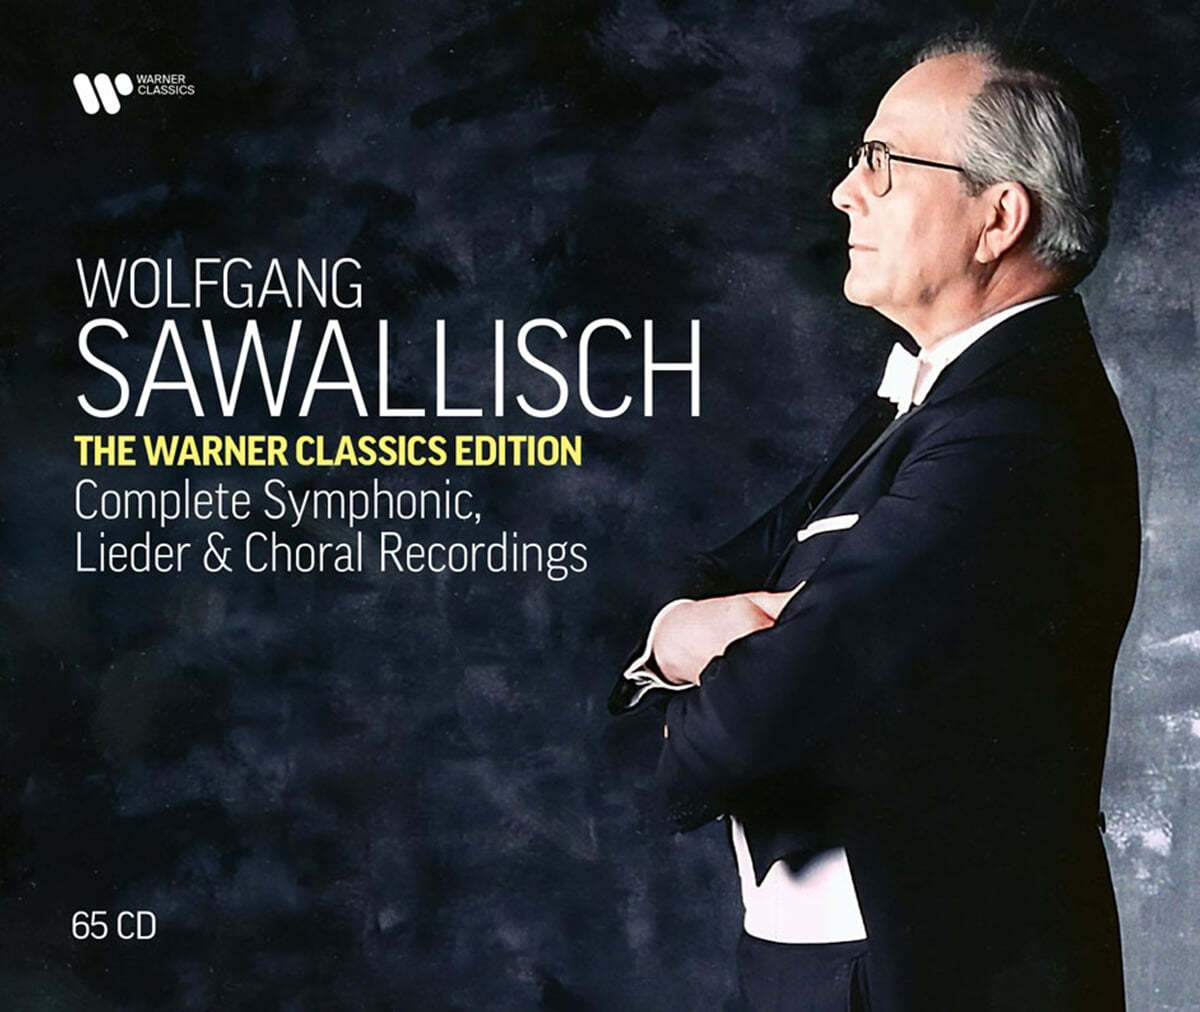 Wolfgang Sawallisch 볼프강 자발리쉬 워너 레이블 에디션 1집 - 관현악, 가곡, 합창 녹음 (The Warner Classics Edition)